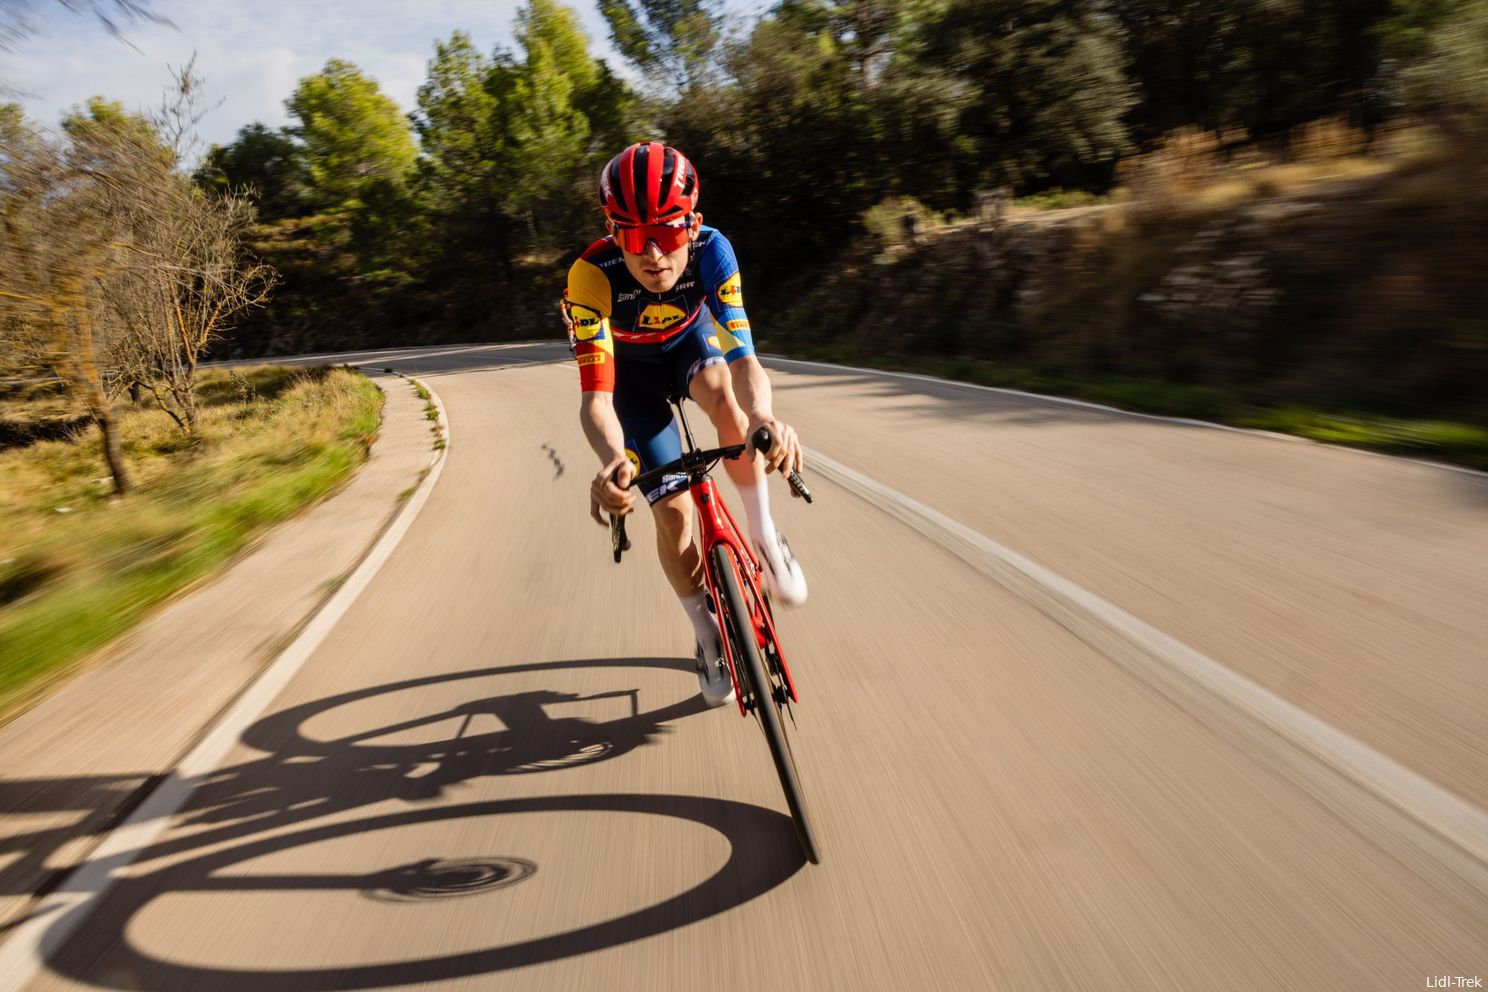 Visma | Lease a Bike? Lidl-Trek! "In five years, we may be the team people look up to"